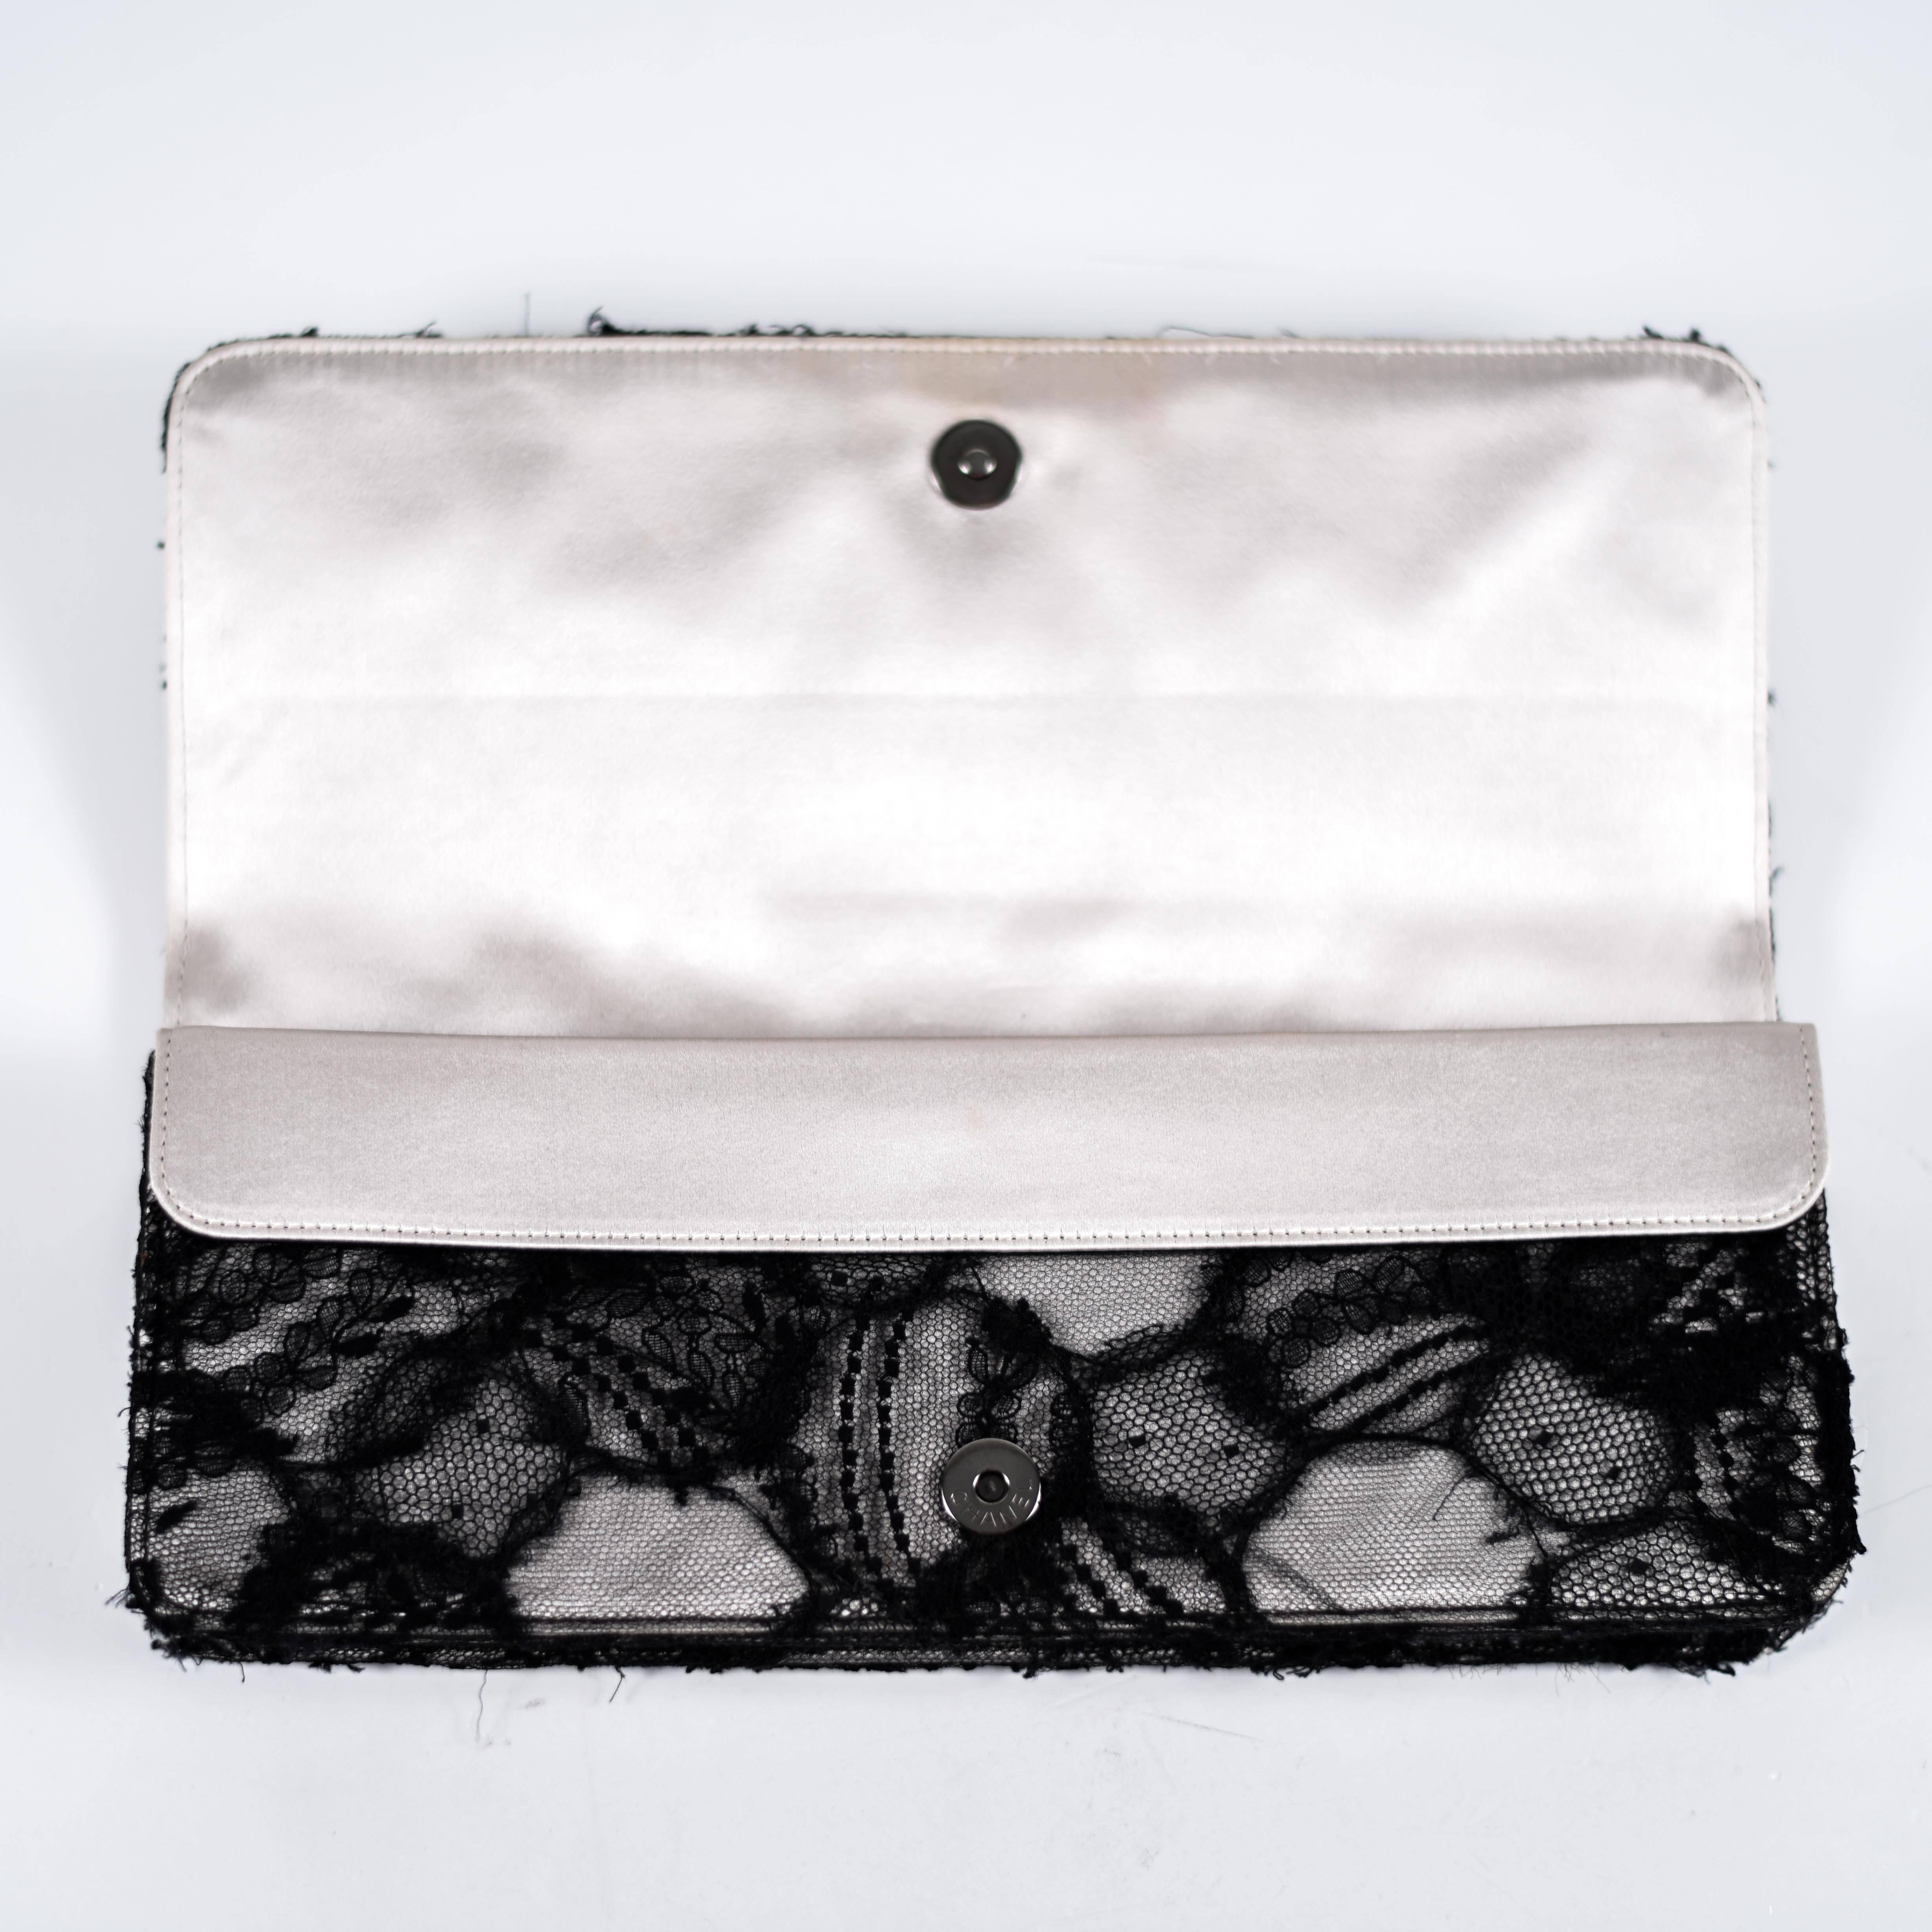 Women's Chanel Lace Crystal Bow Clutch - 2009 Black White Satin CC Logo Silver Handbag For Sale